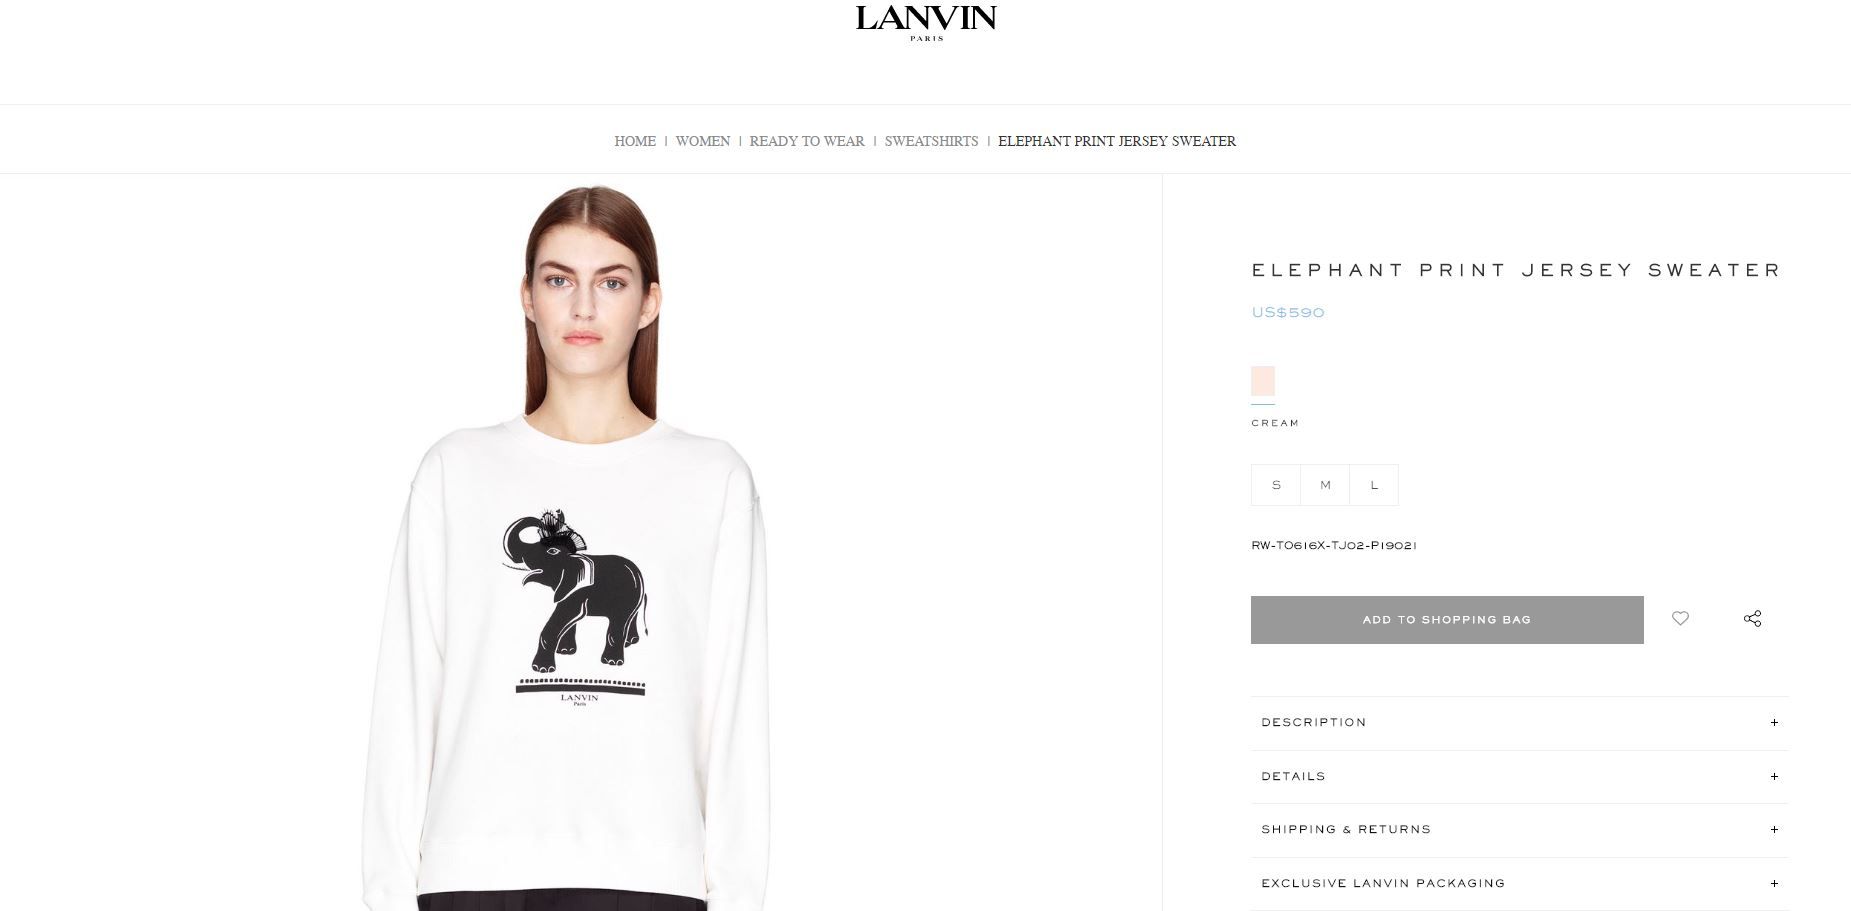 Sweater Lanvin Paris milik Syahrini